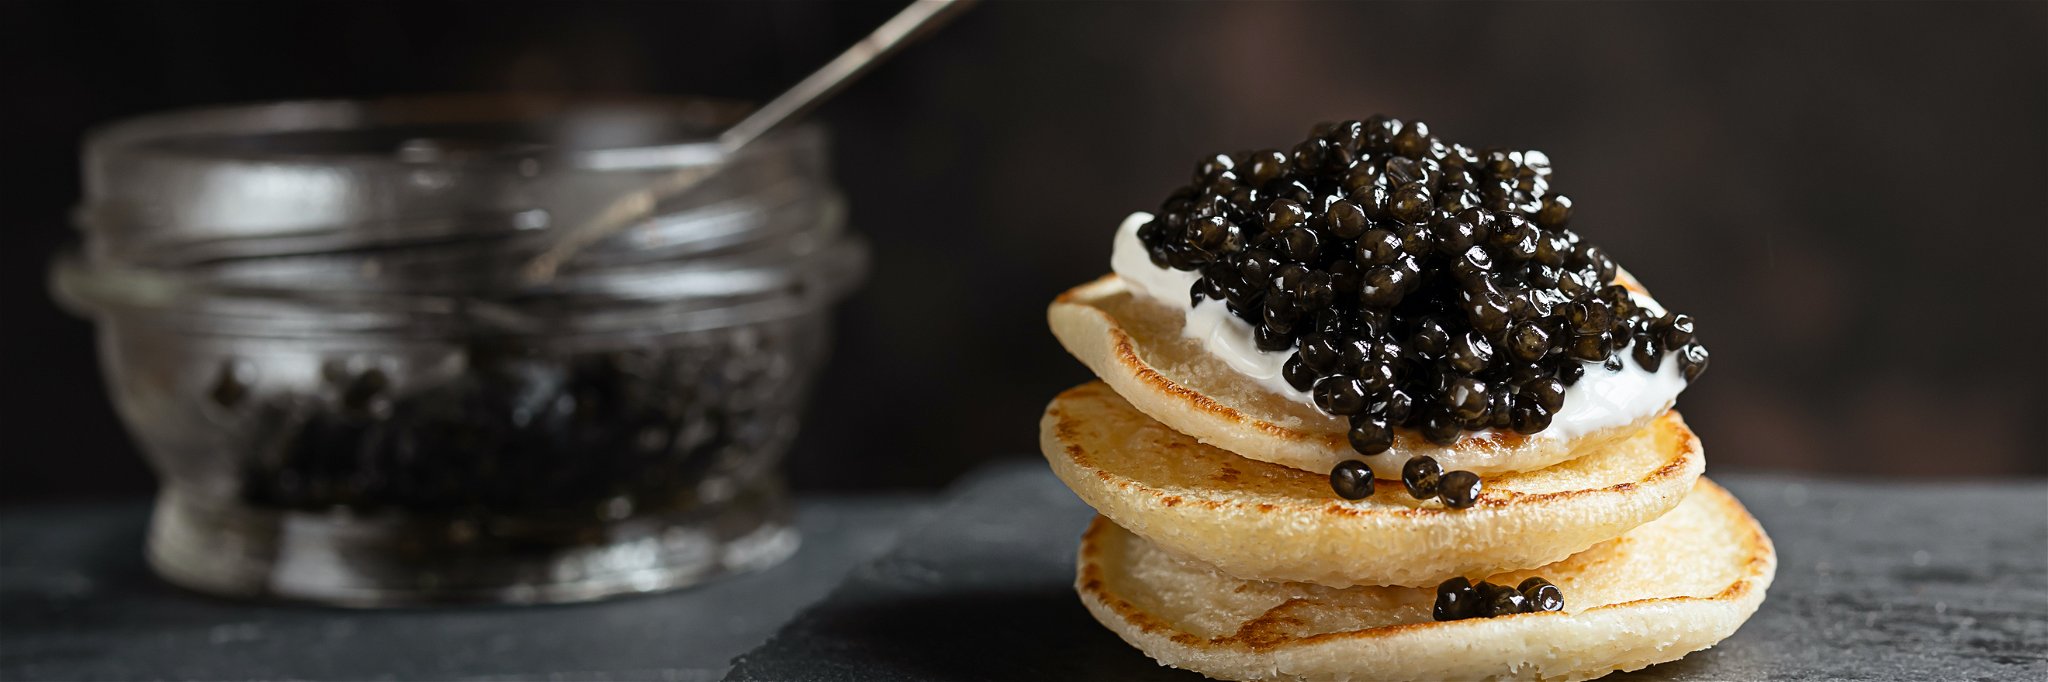 Homemade Blini with Caviar